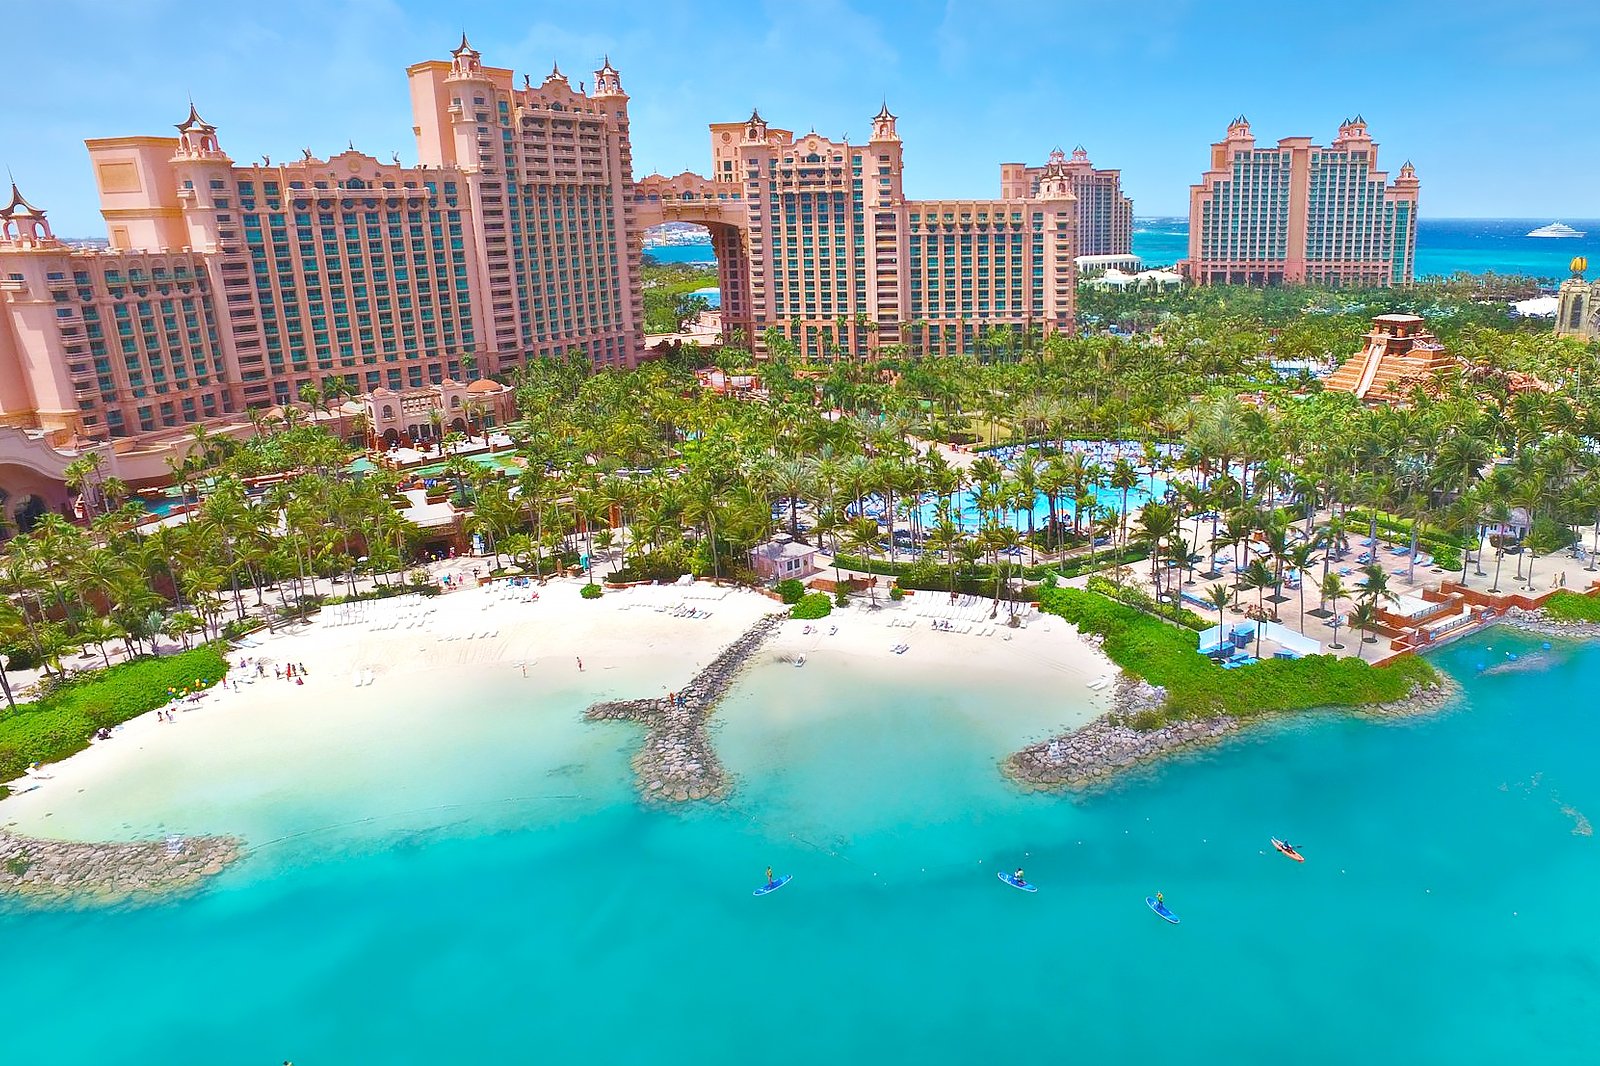 Atlantis Hotel and Resort in the Bahamas